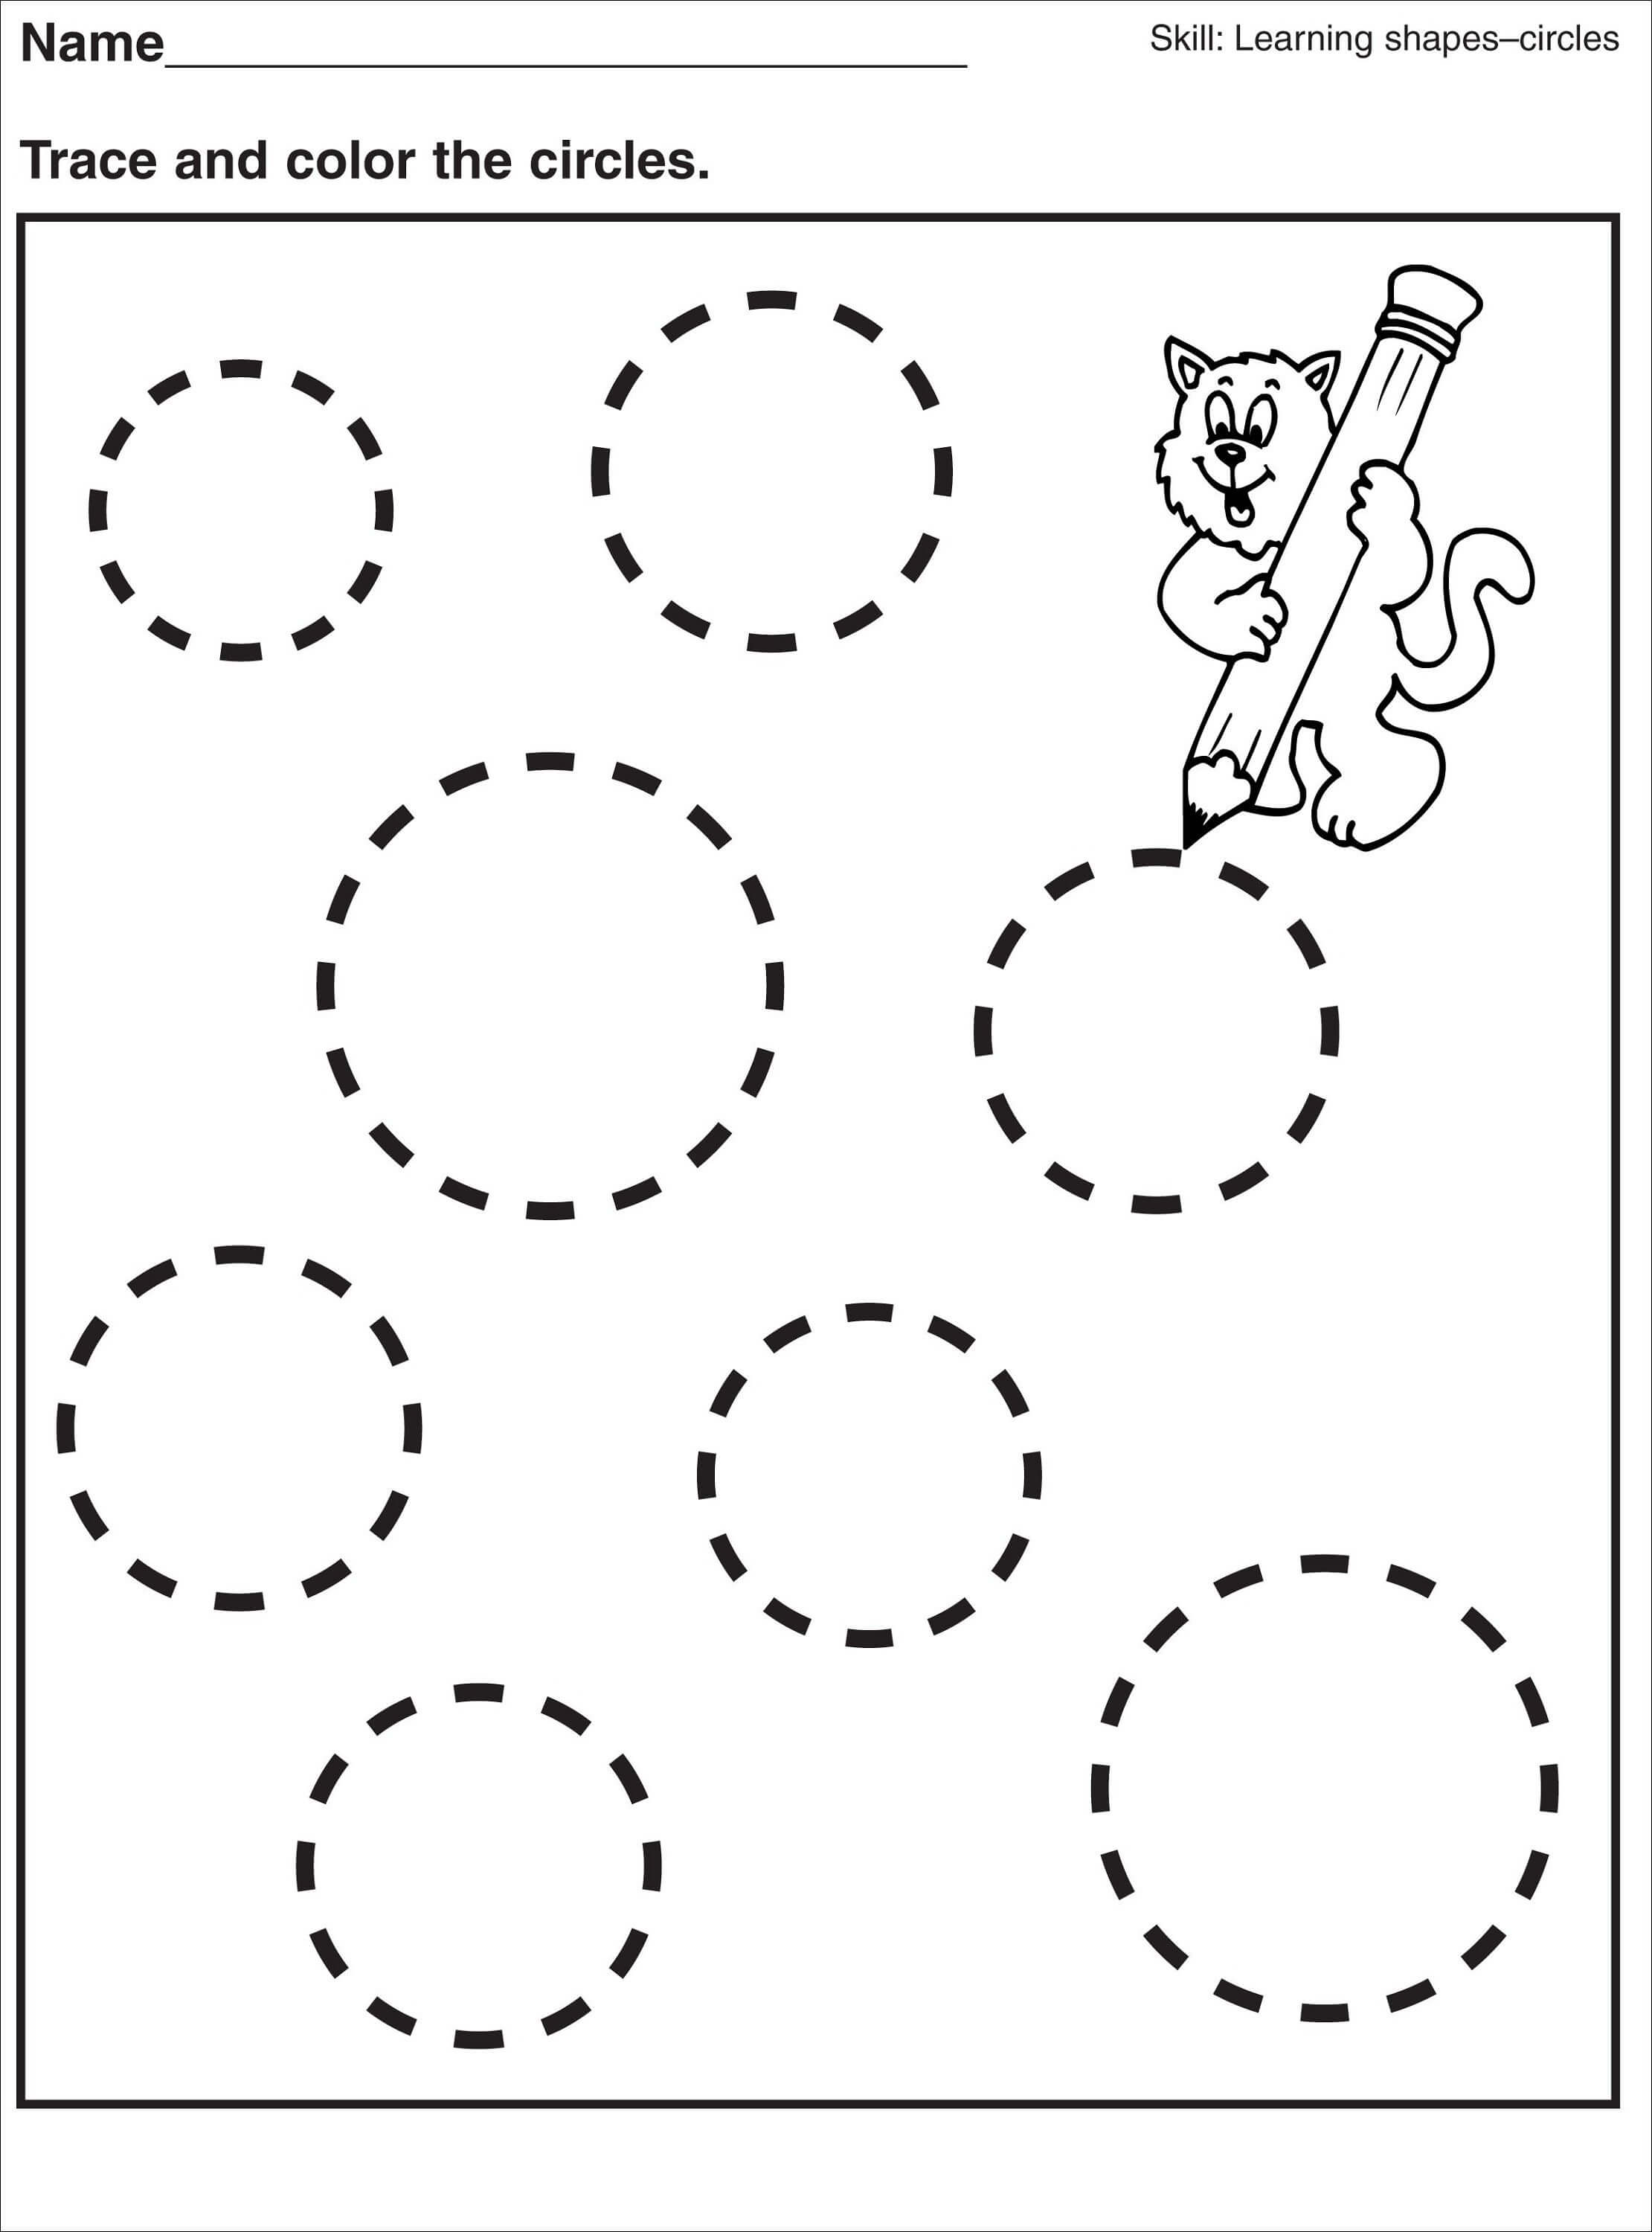 Preschool Tracing Pages - Circles